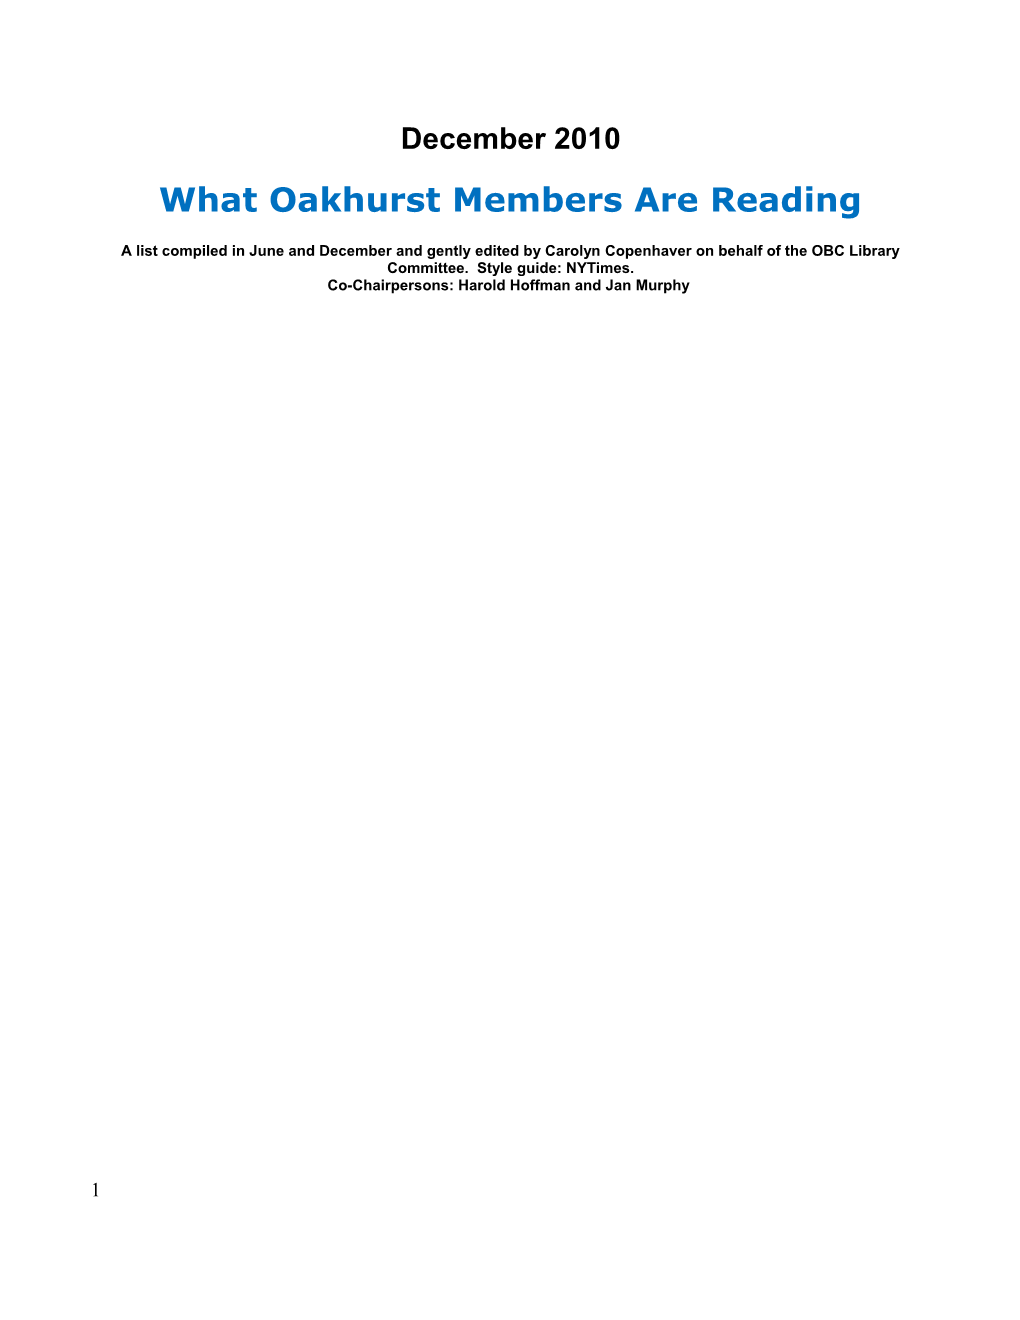 What Oakhurst Members Are Reading